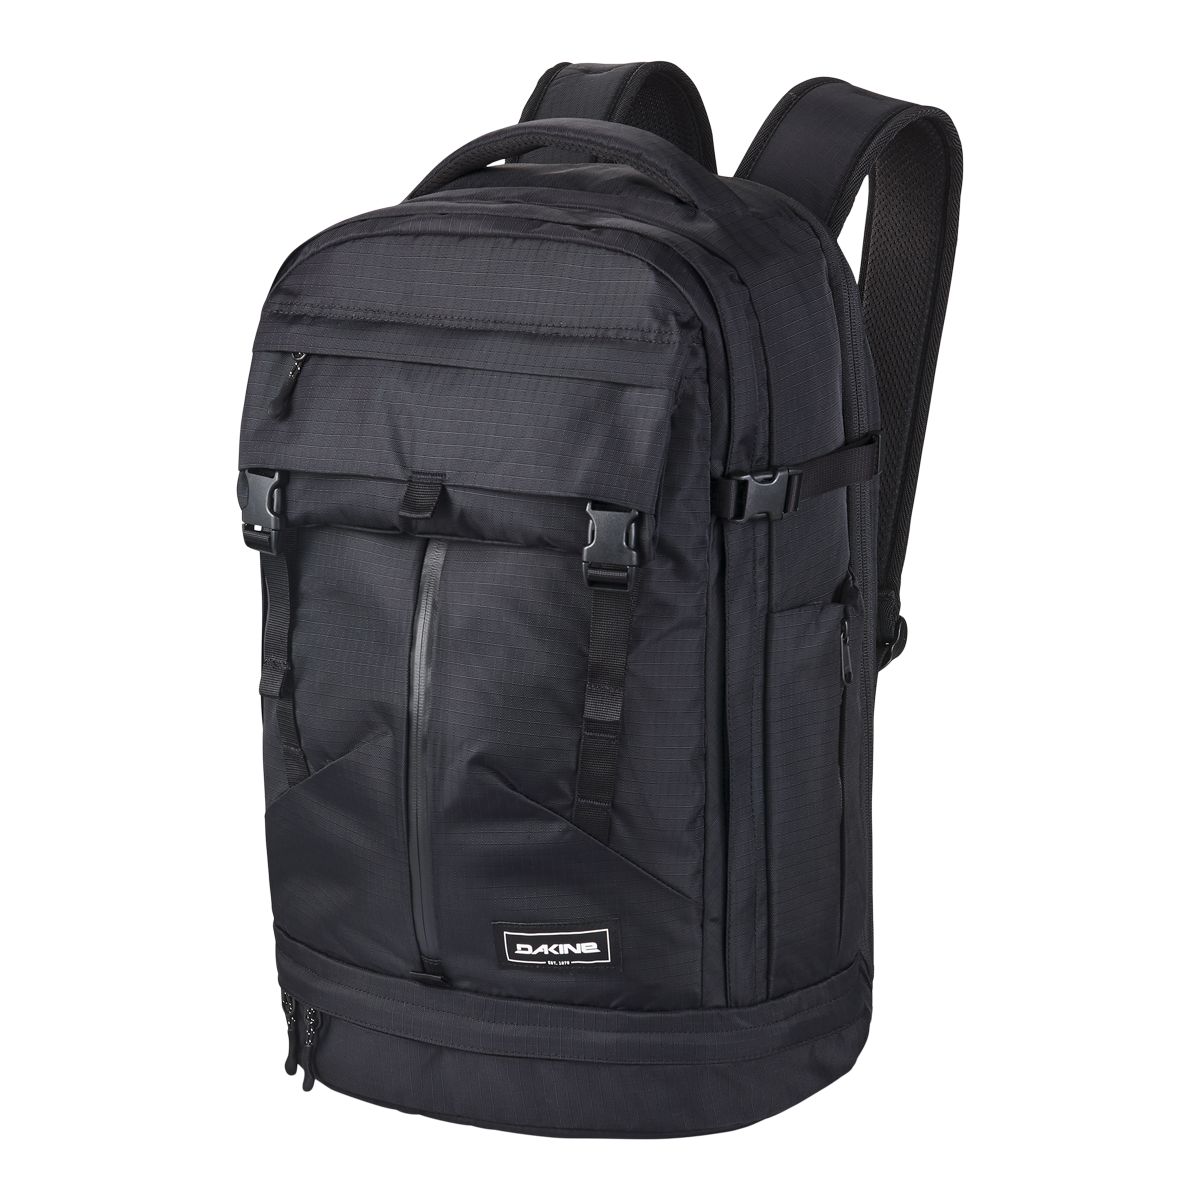 Dakine Verge 32L Backpack | SportChek